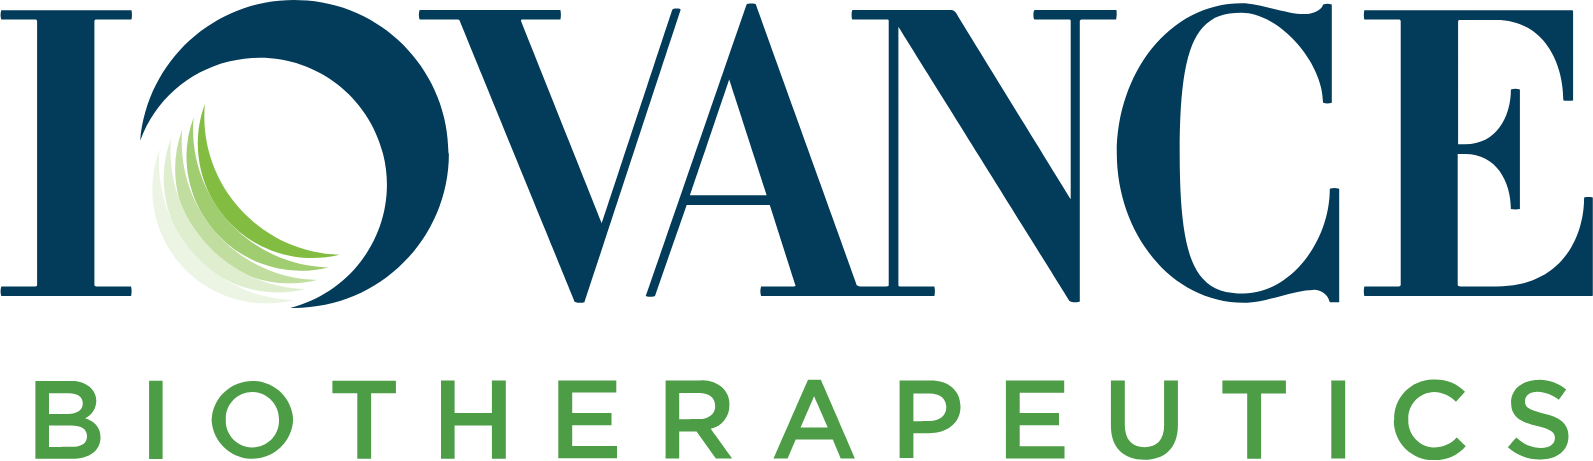 Iovance Biotherapeutics
 logo large (transparent PNG)